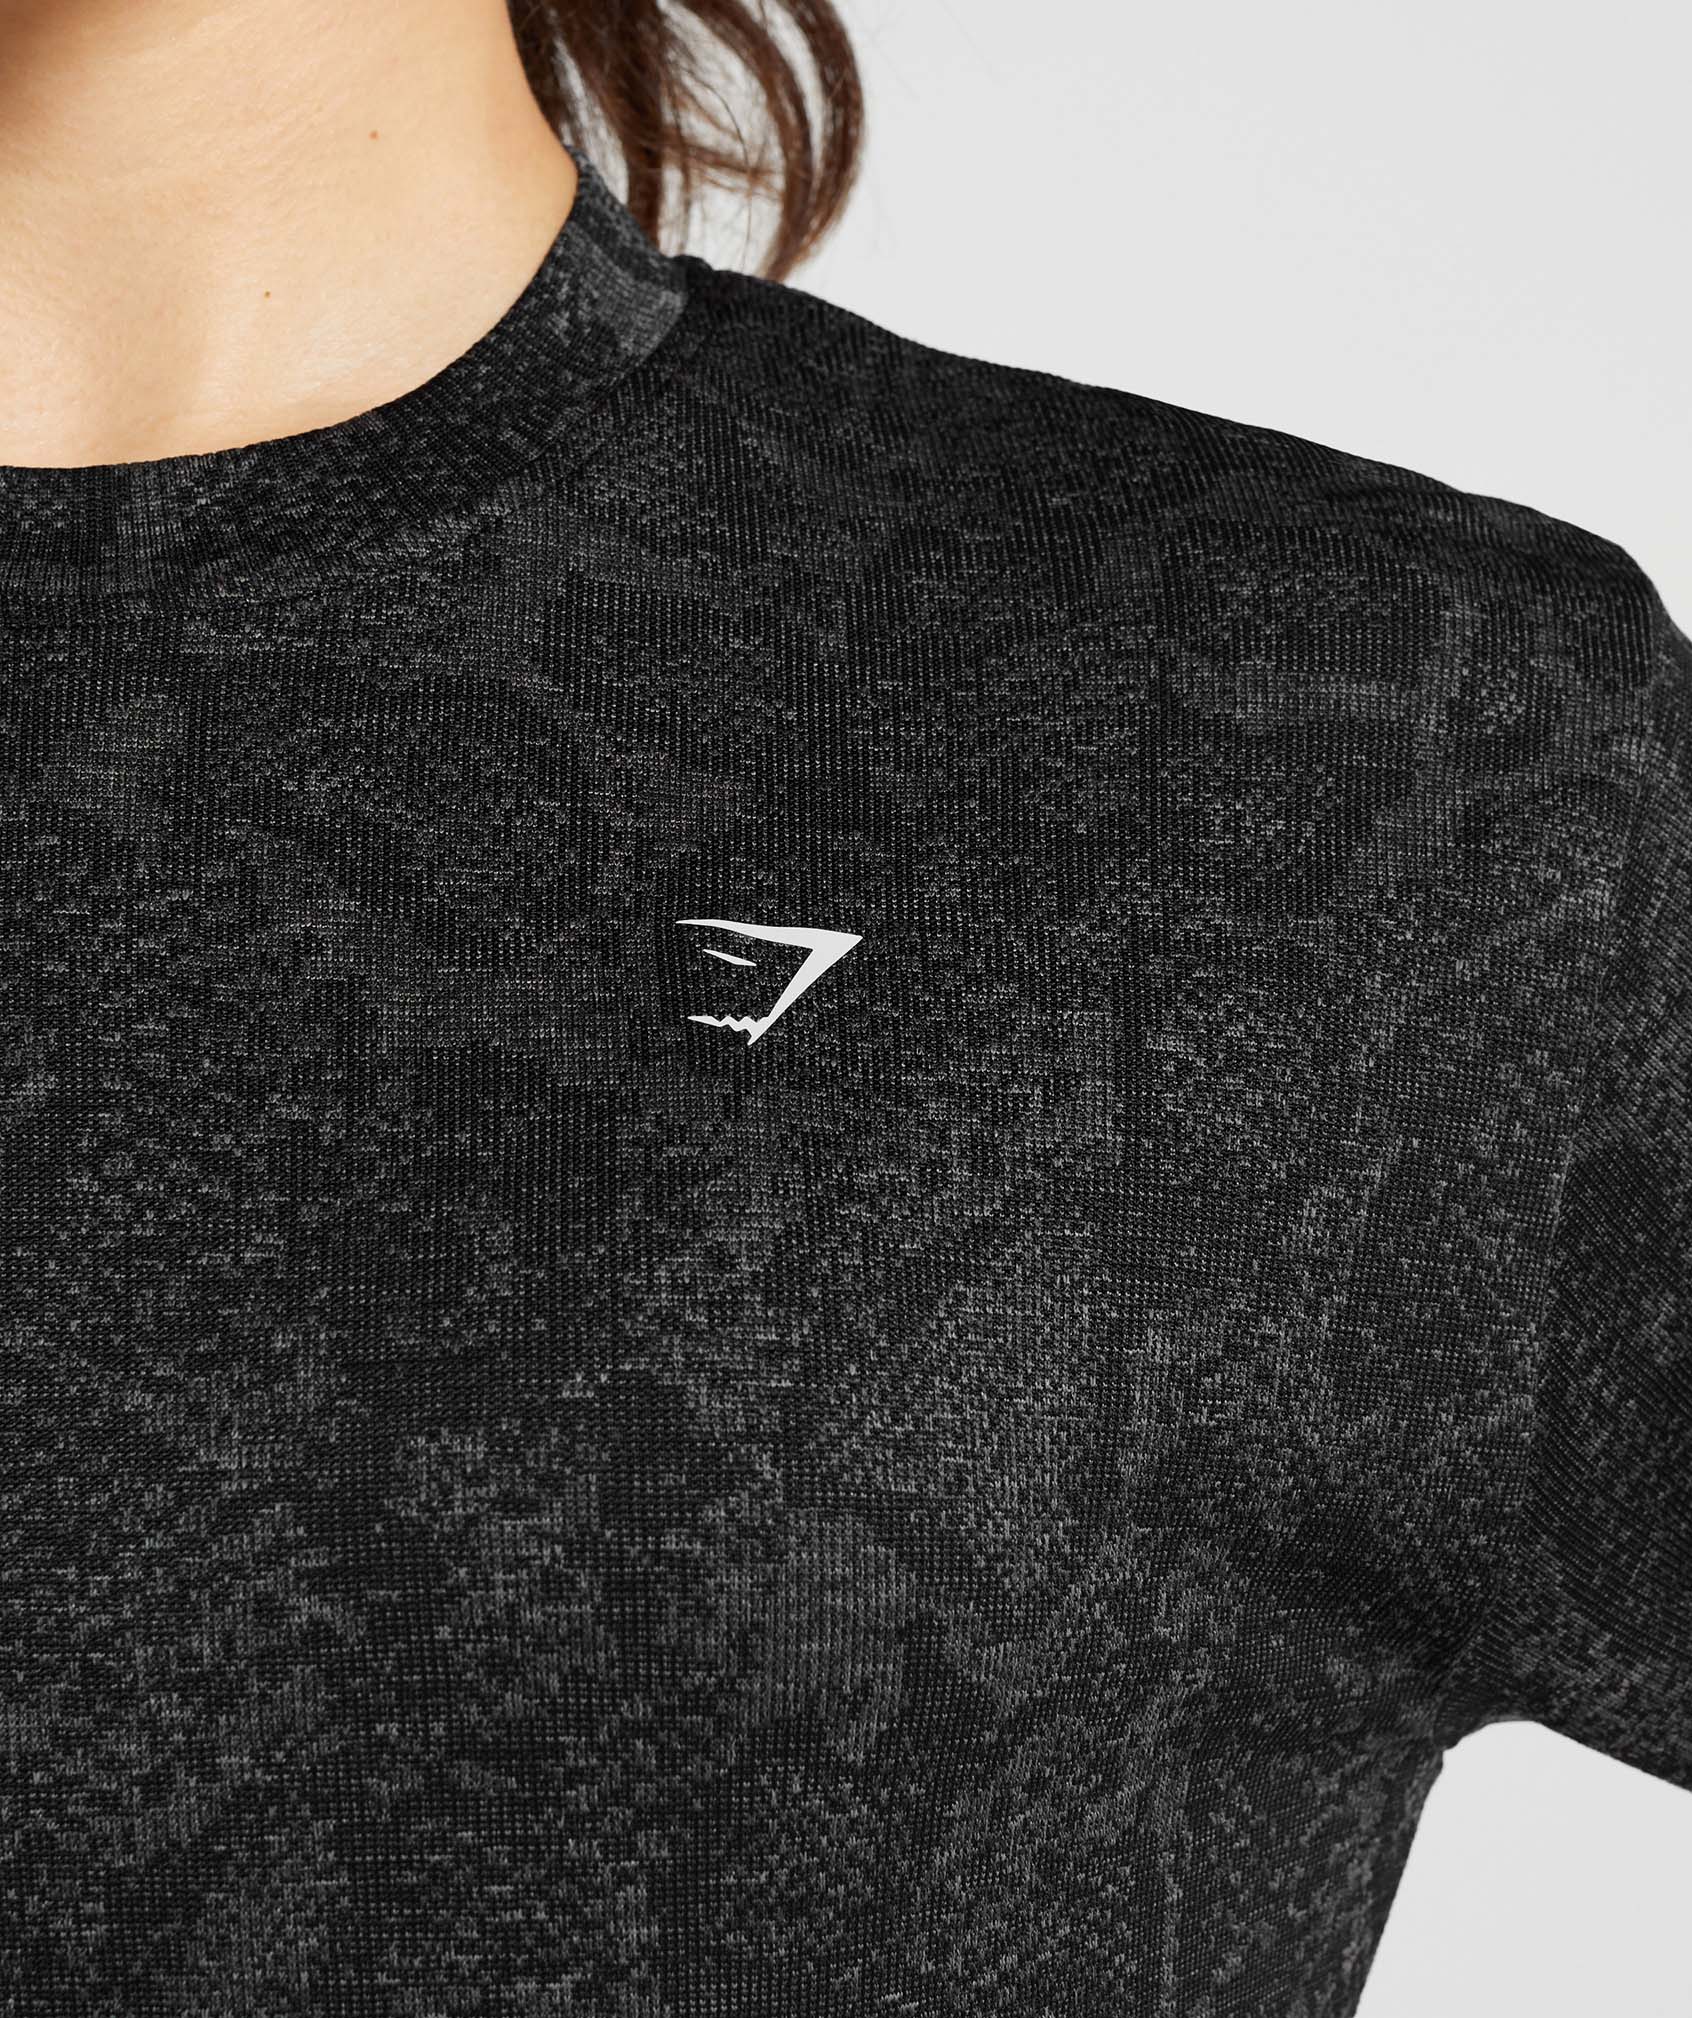 Adapt Animal Seamless T-Shirt in Urban Grey/Black